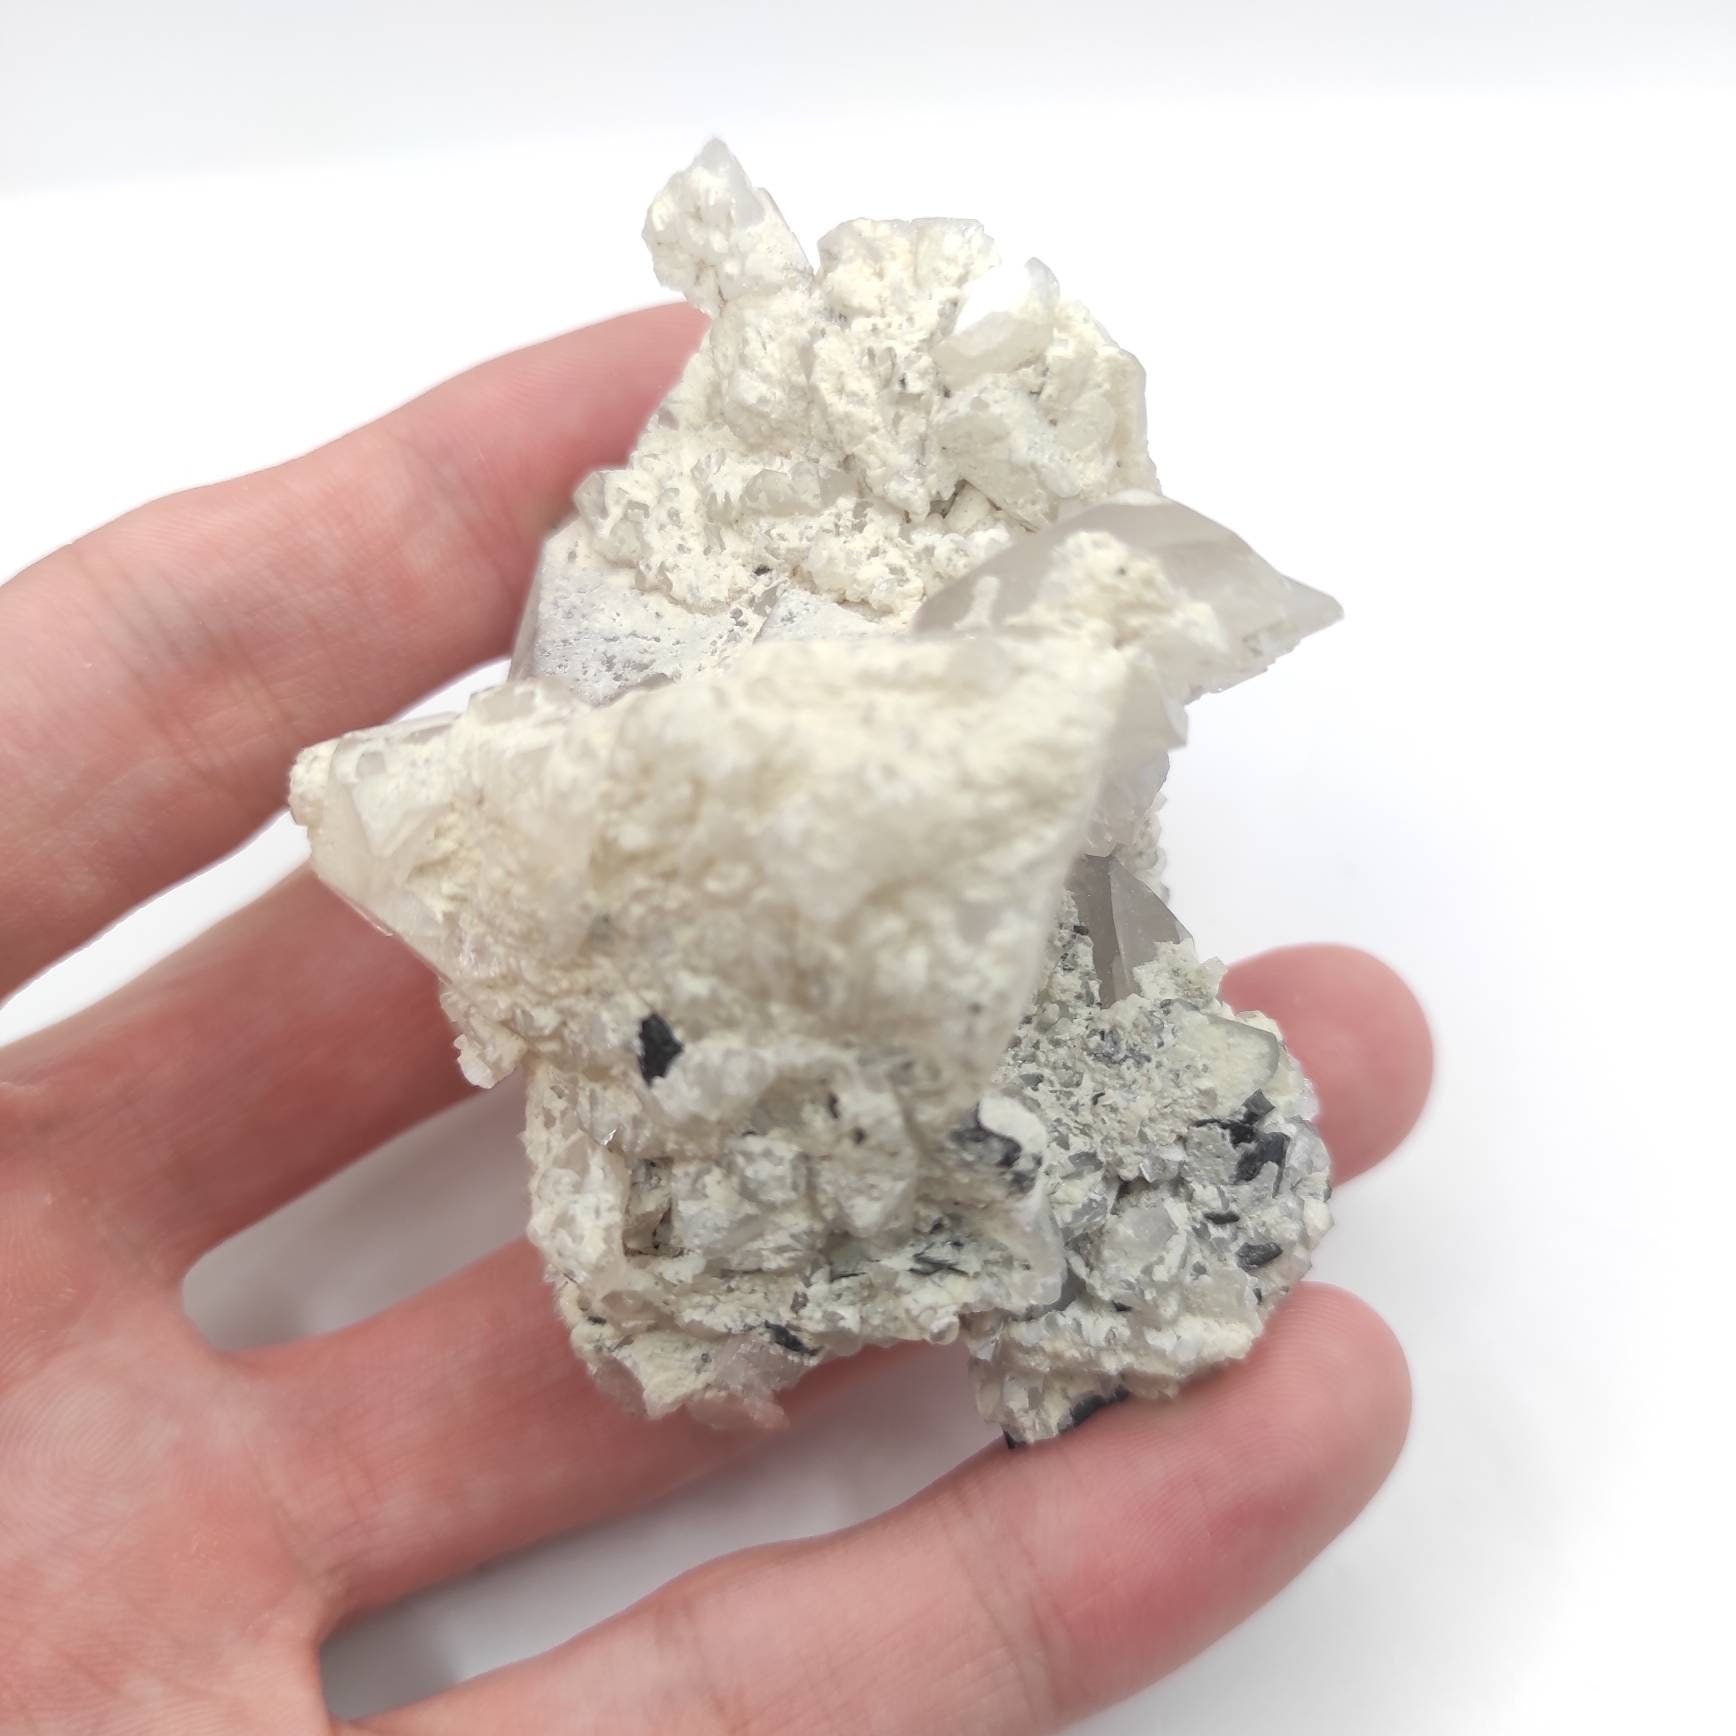 113g Black Tourmaline in Smoky Quartz - Natural Quartz Specimen - Tourmaline in Quartz Cluster - Raw Quartz Minerals - Pakistan Tourmaline